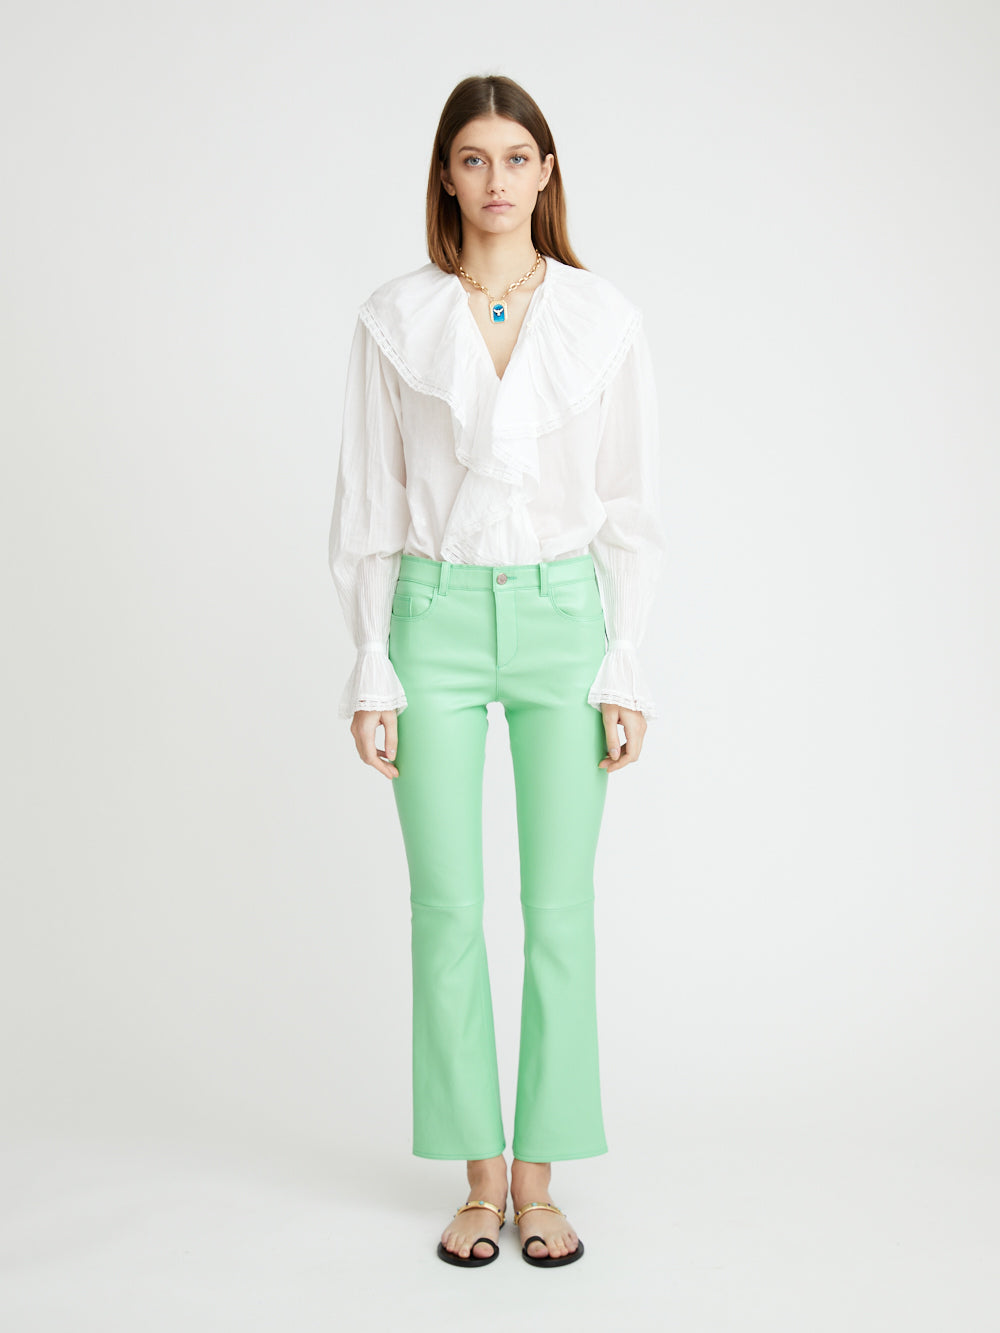 Green Dipped Dean Pants - Pantalon - Stouls - Vêtements femme - By Marie